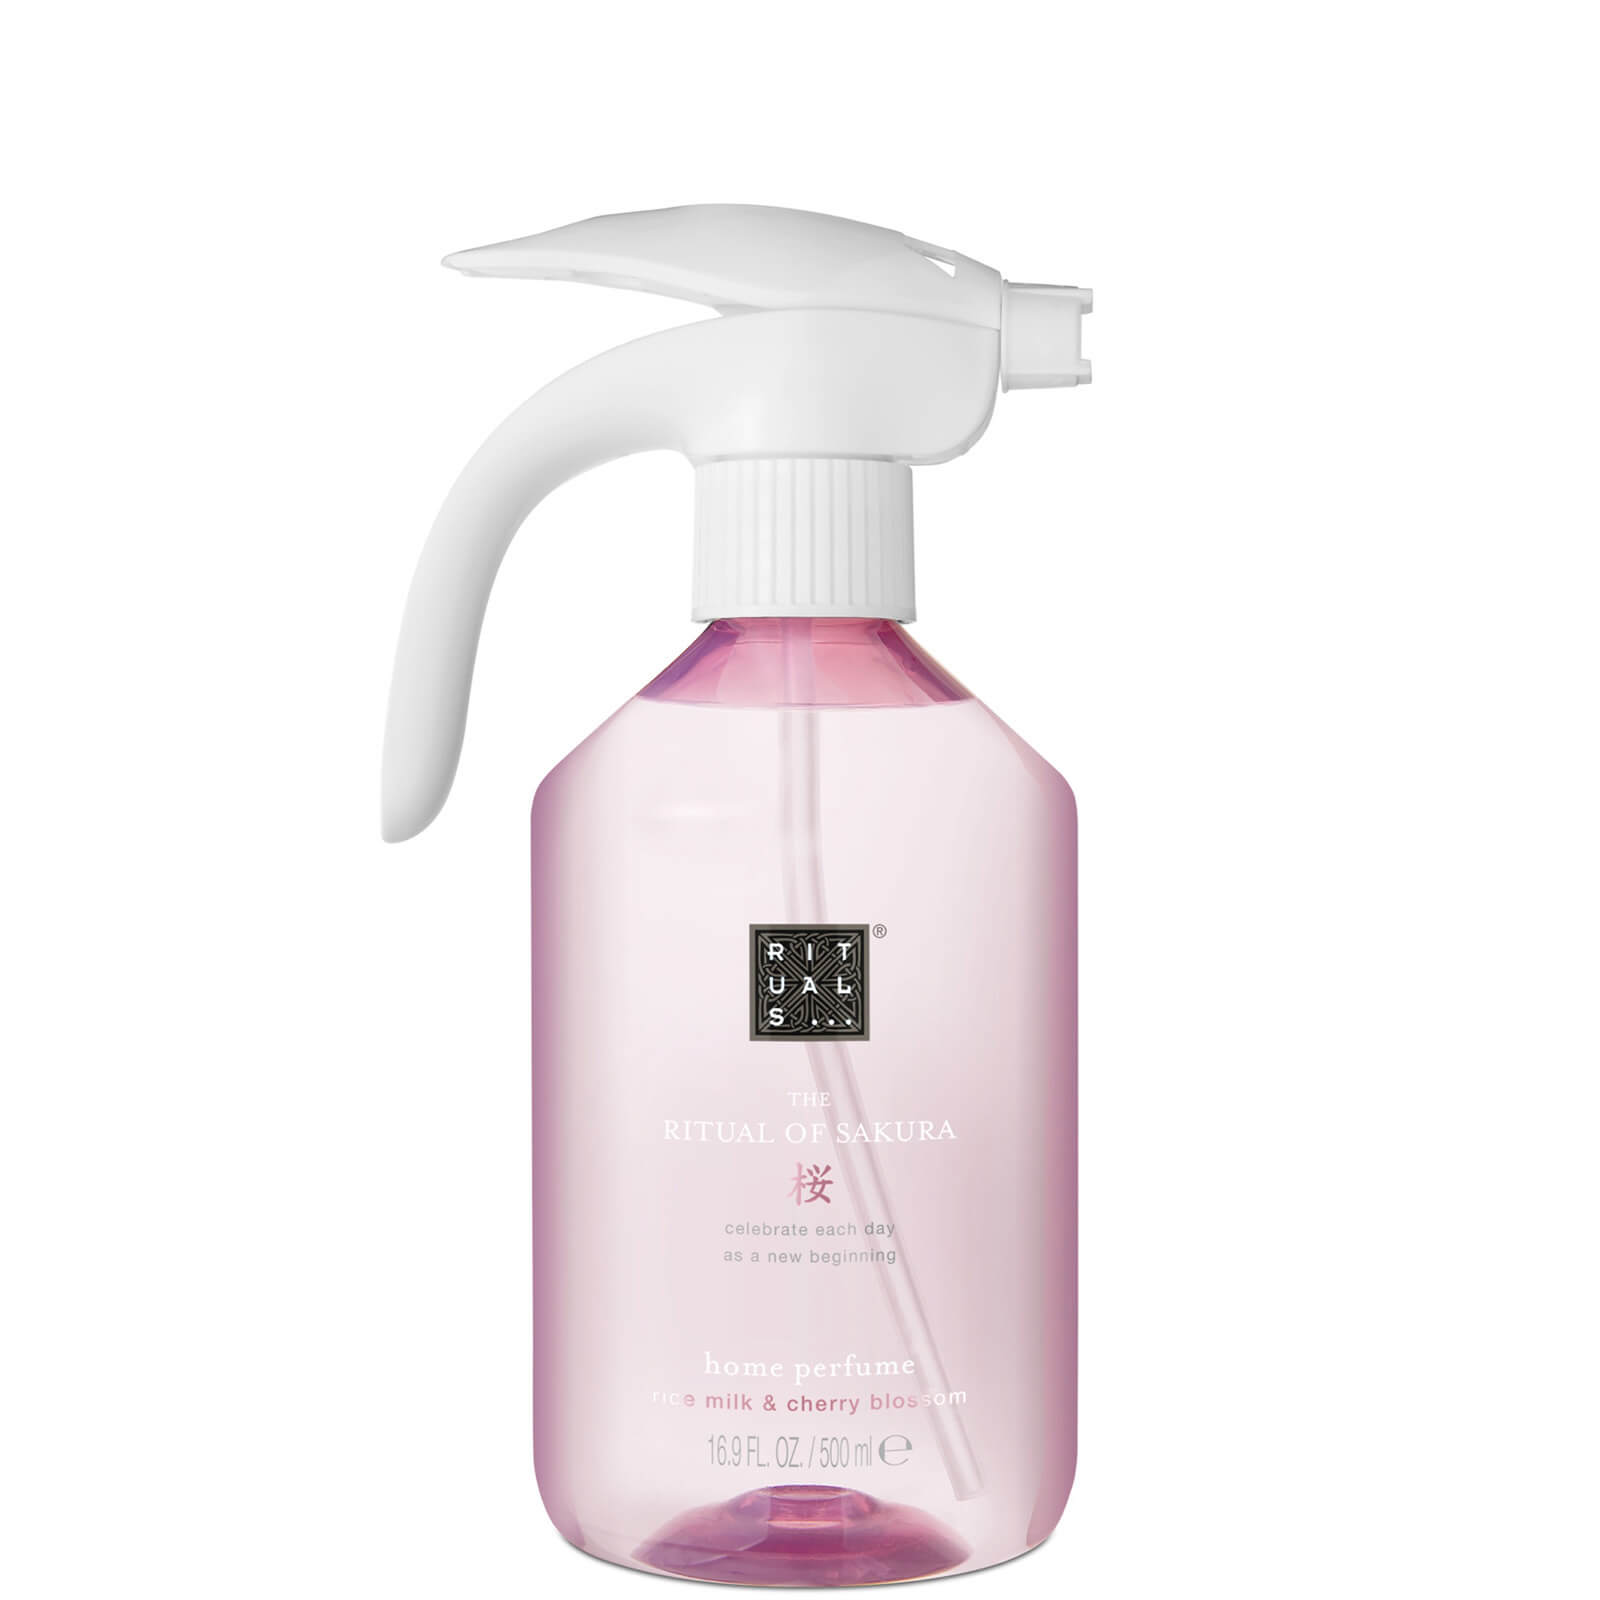 RITUALS The Ritual of Sakura Parfum d'Interieur, profumo per l'ambiente 500 ml